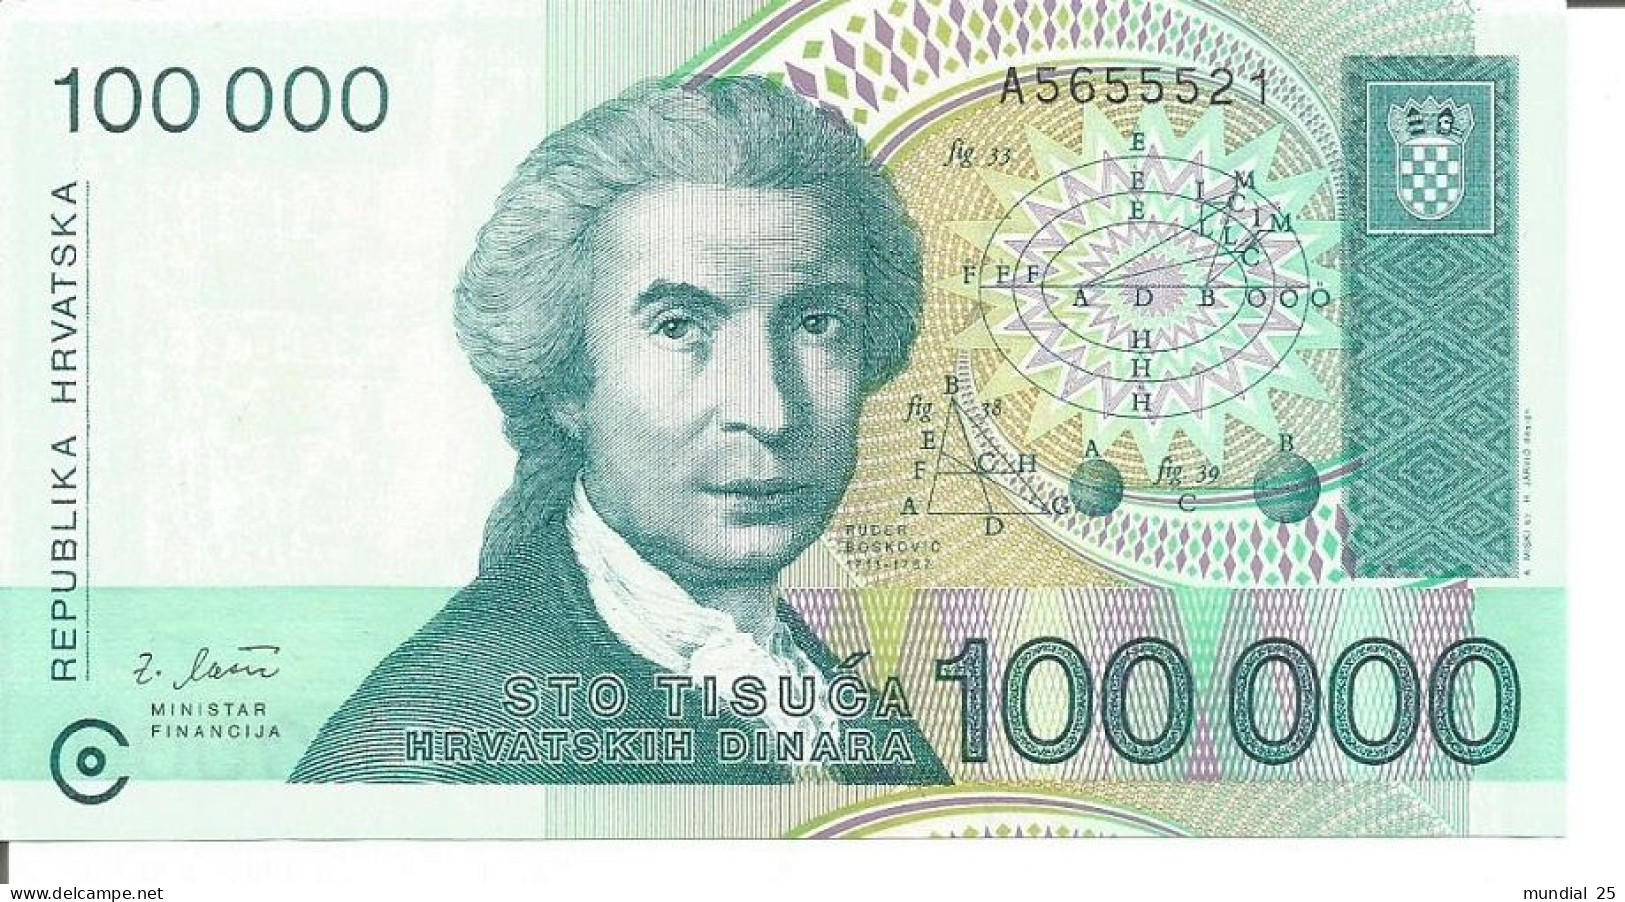 CROATIA 100.000 DINARA 30/05/1993 - Croacia